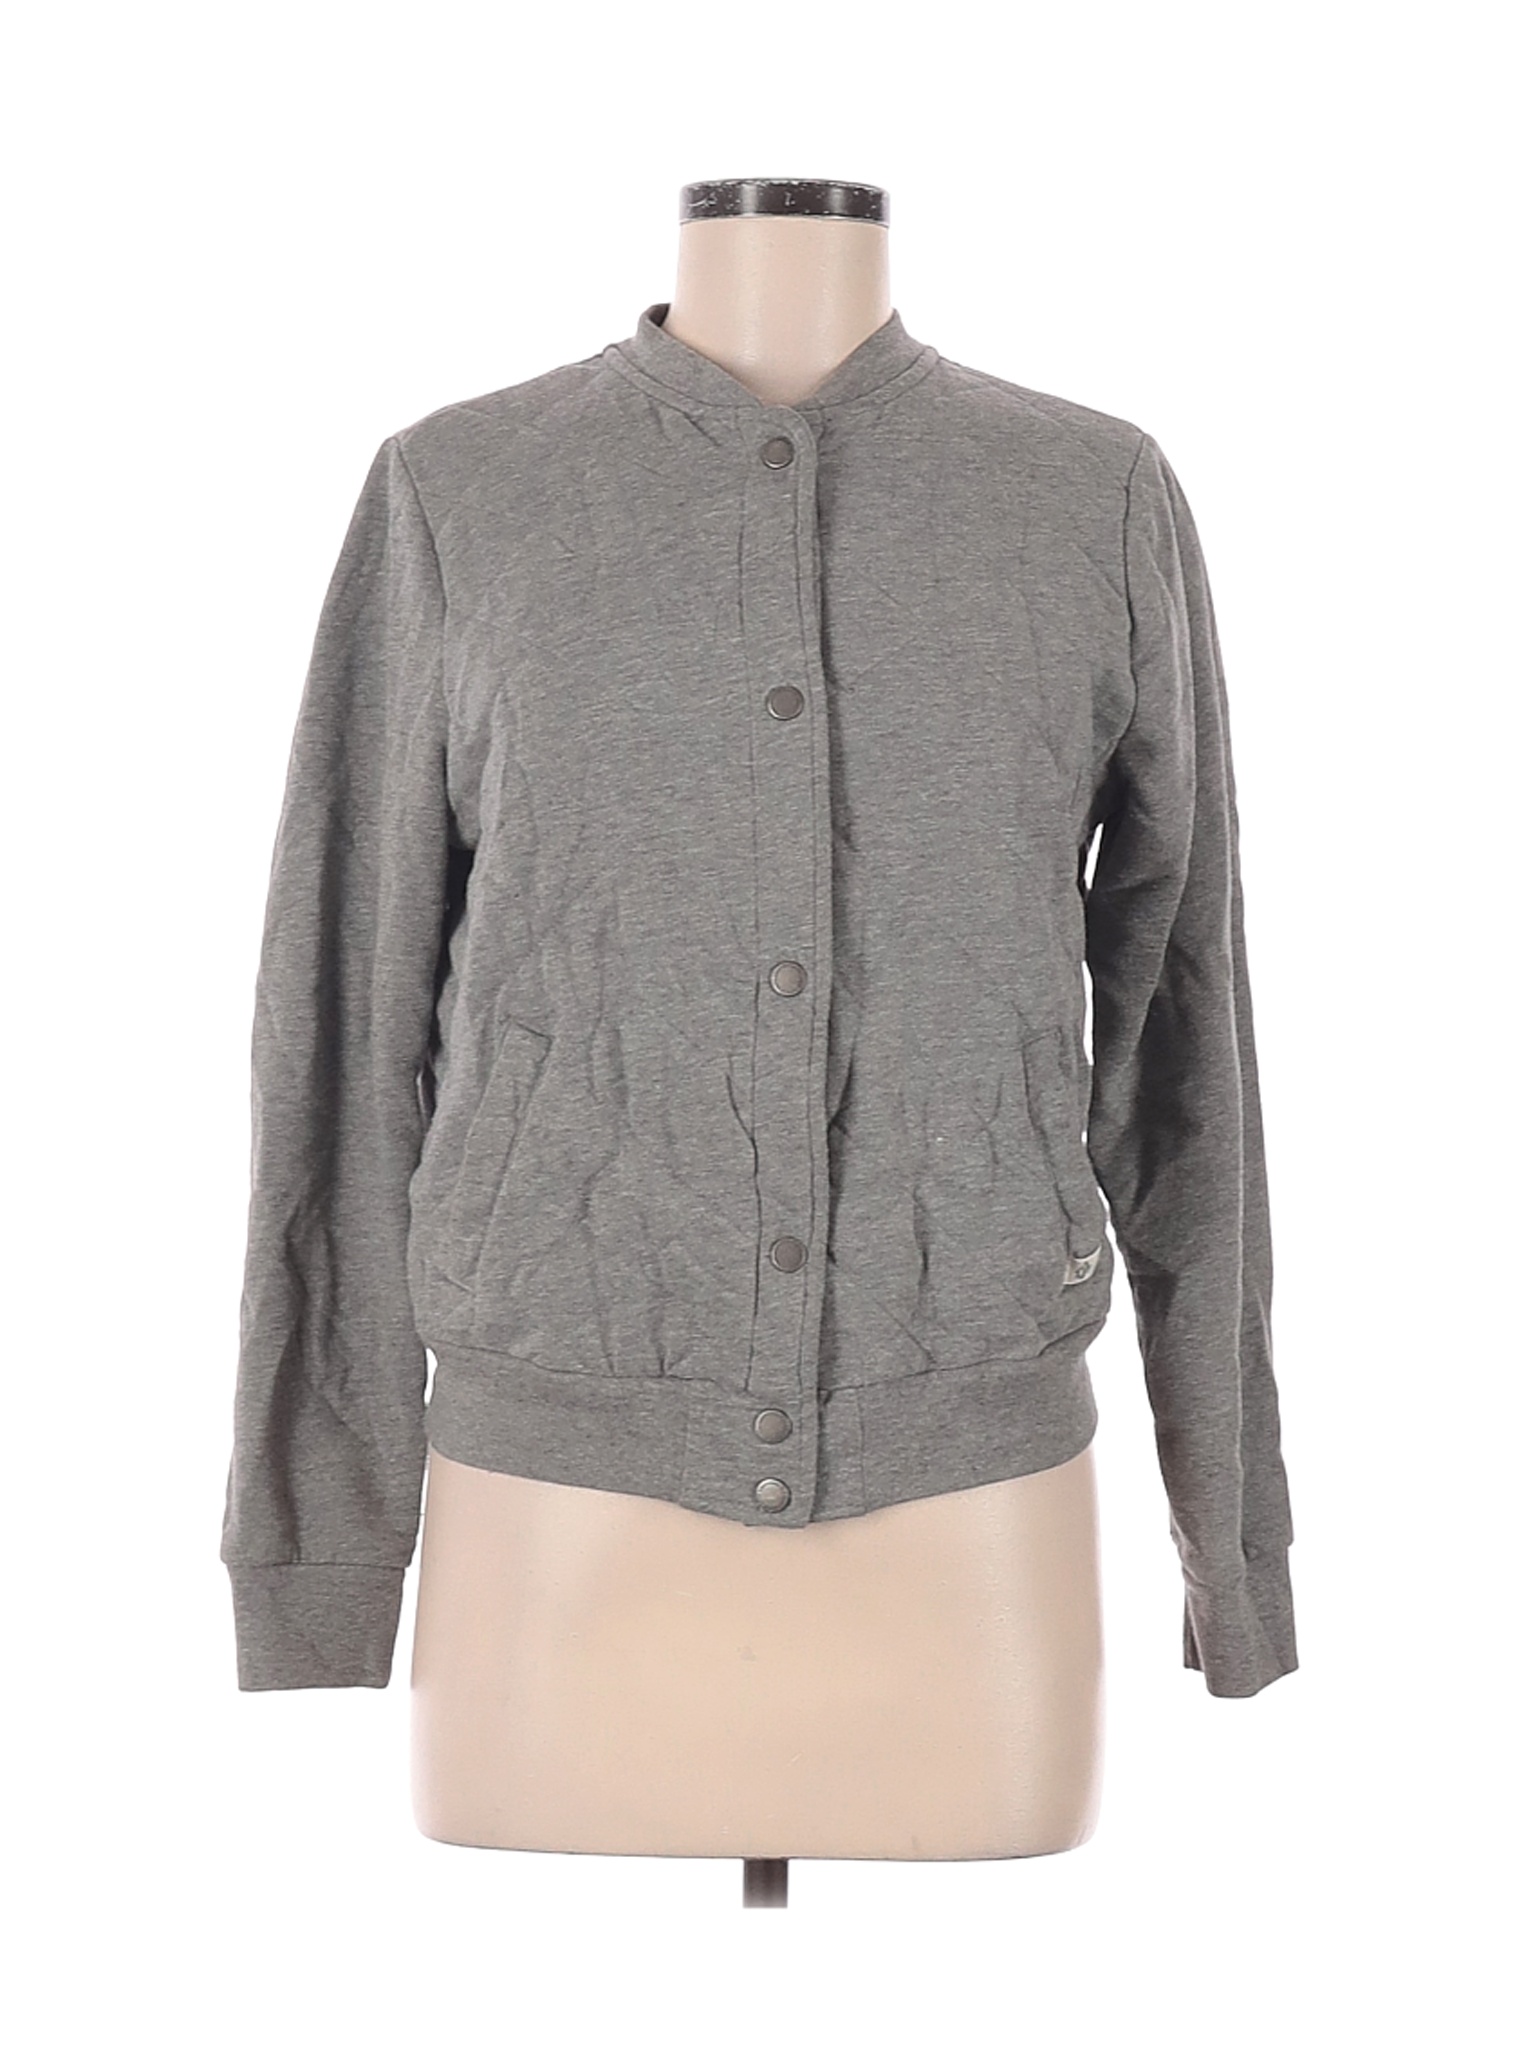 Abercrombie & Fitch Women Gray Jacket M | eBay